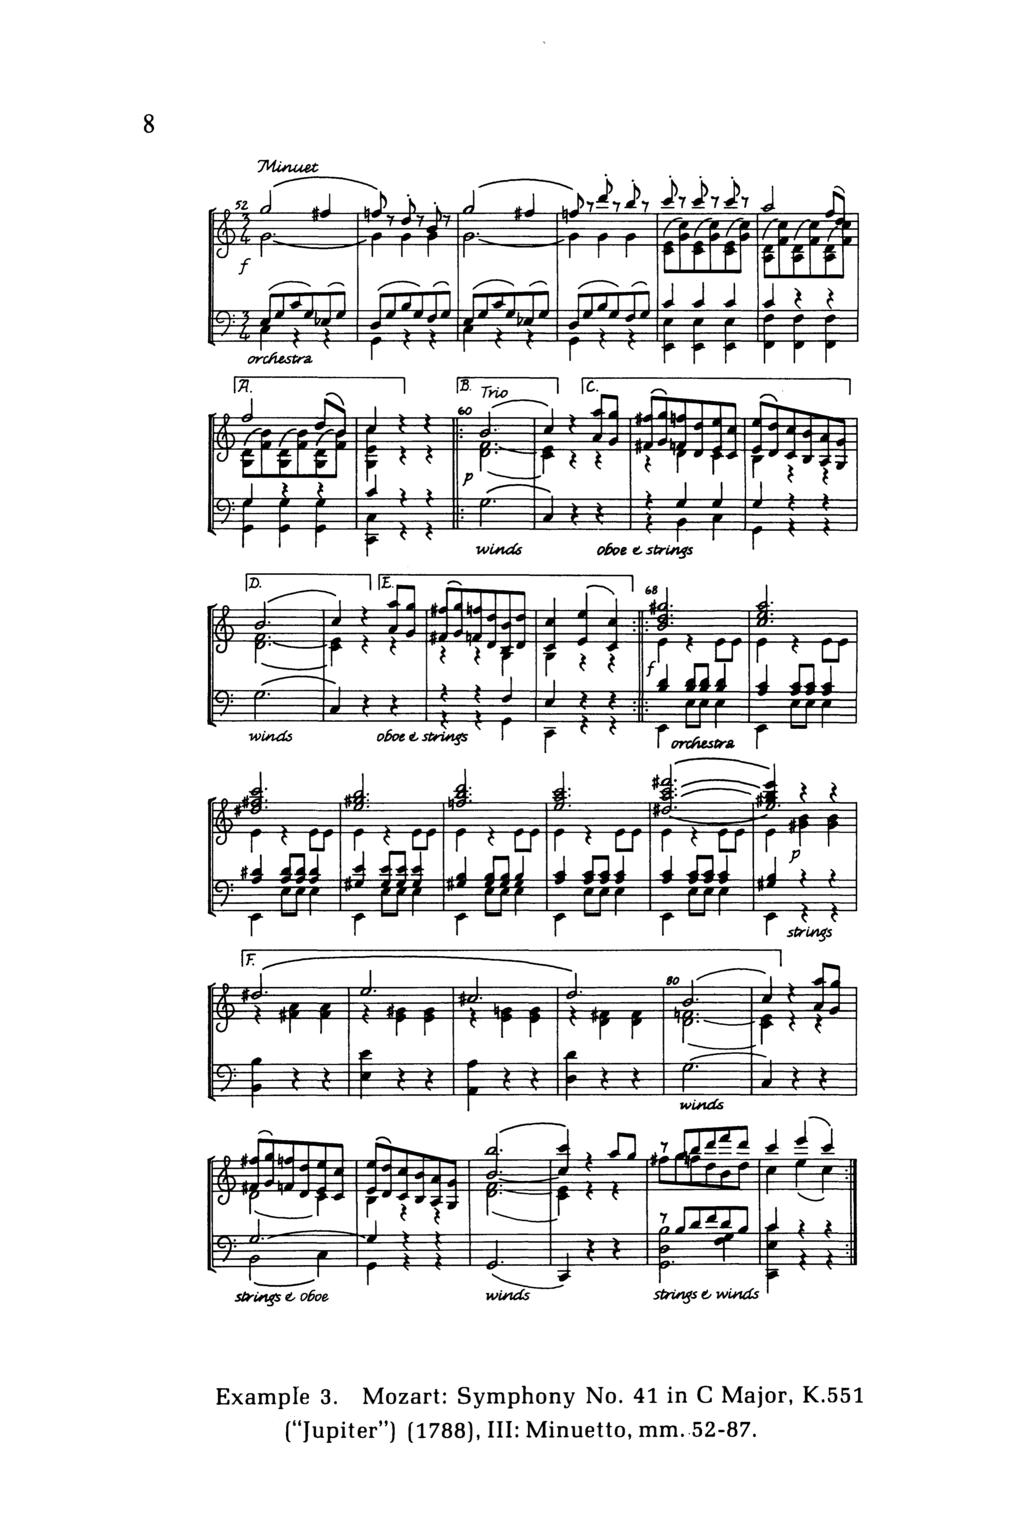 Example 3. Mozart: Symphony No. 41 in C Major, K.